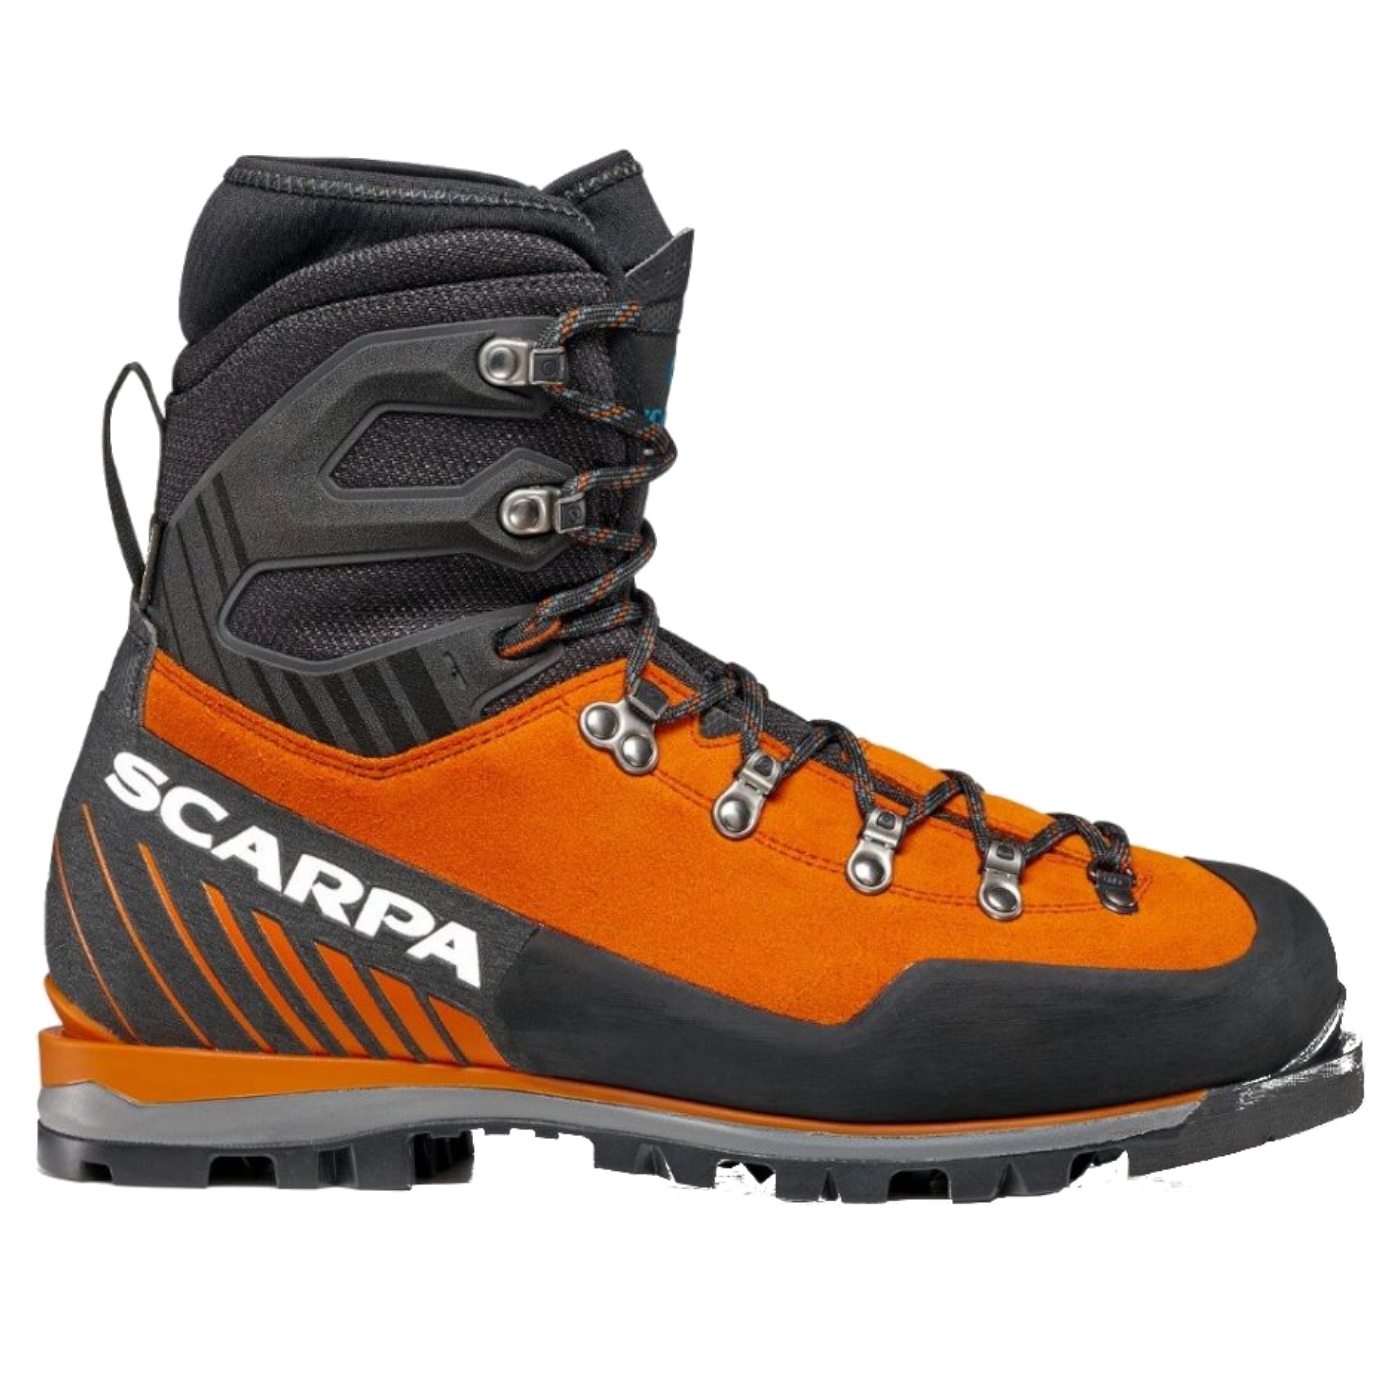 Scarpa Mont Blanc Pro GTX Size 47 Mountaineering Boot